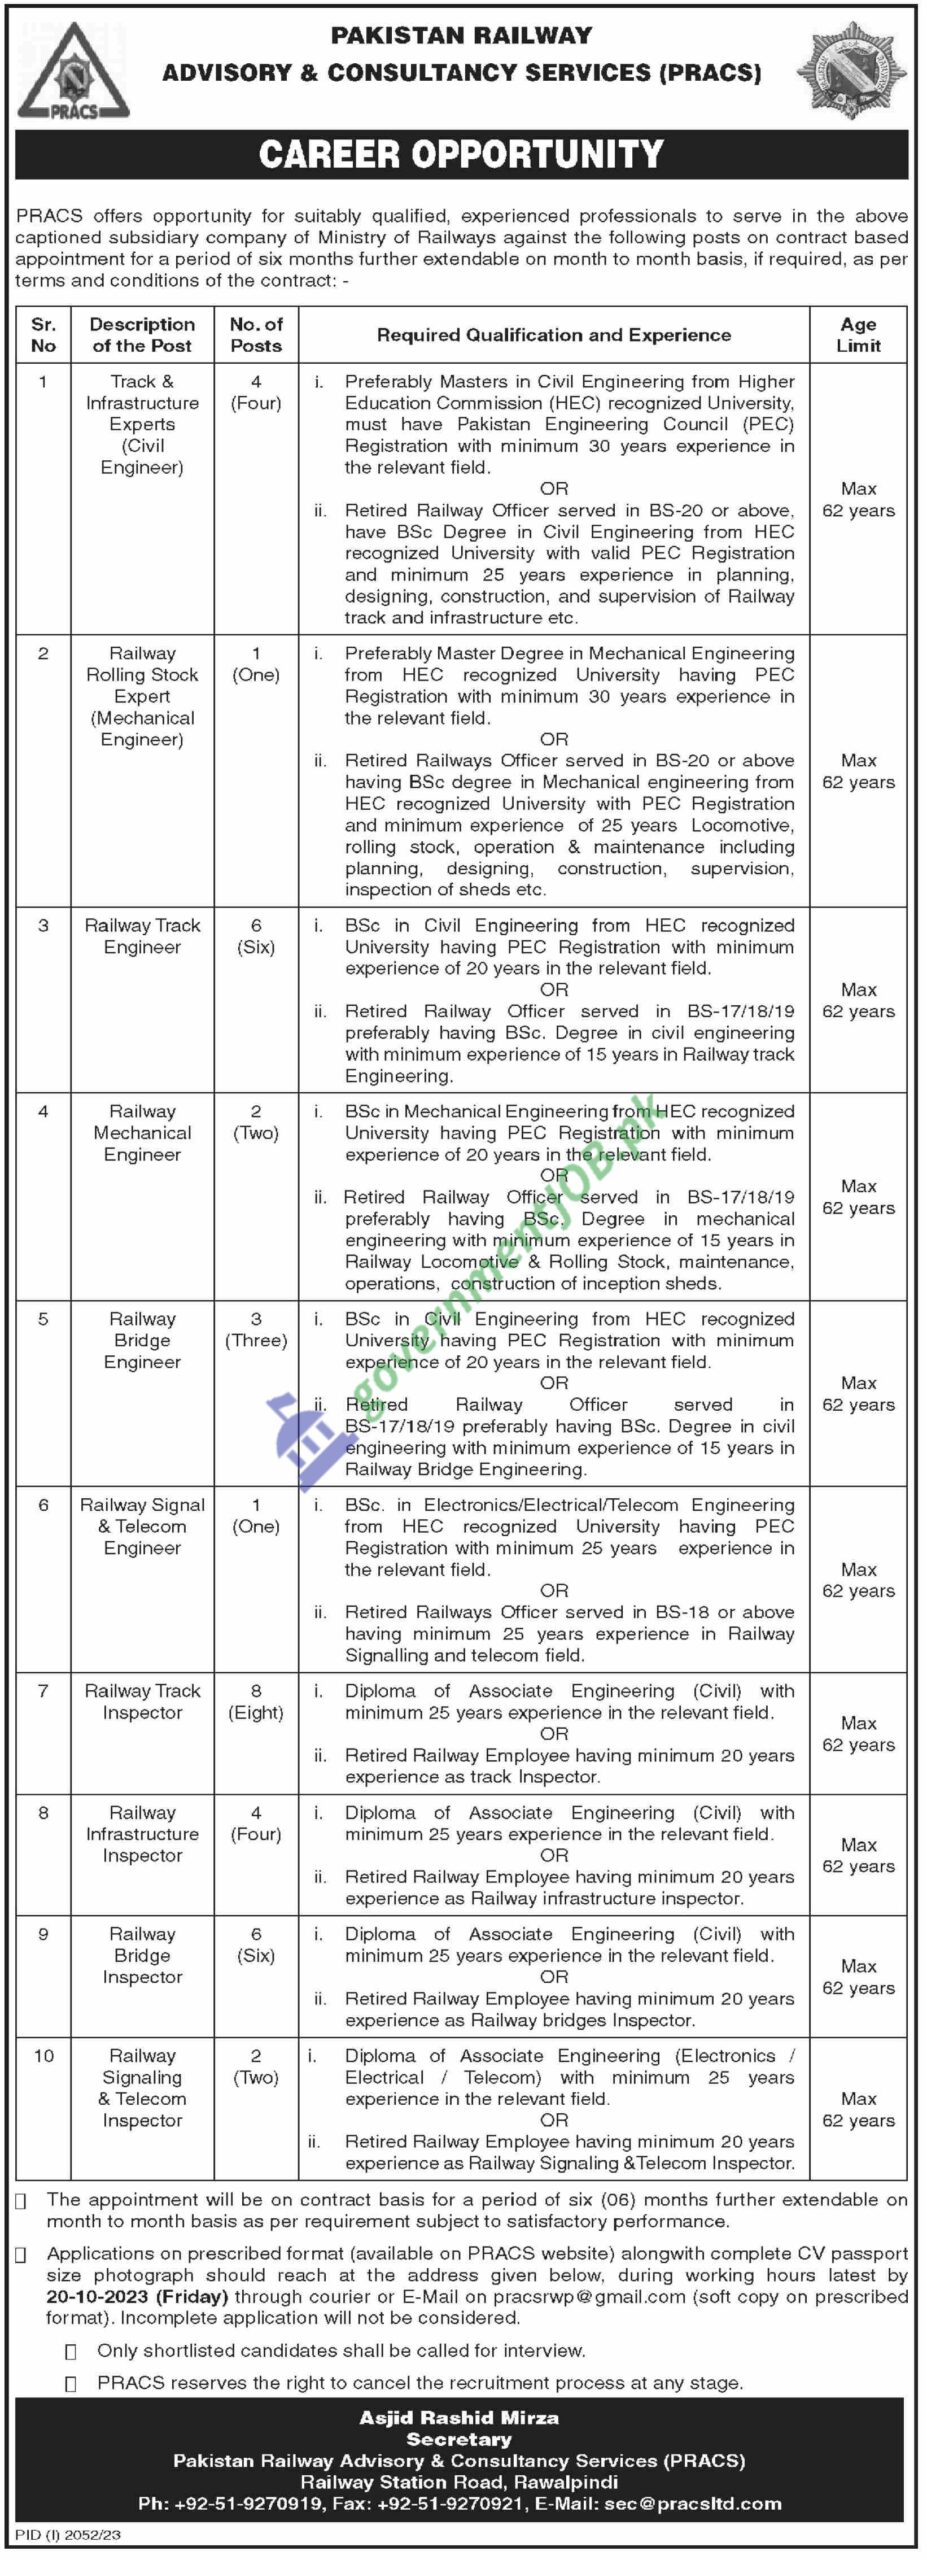 Pakistan Railway Advisory & Consultancy Services Jobs 2023